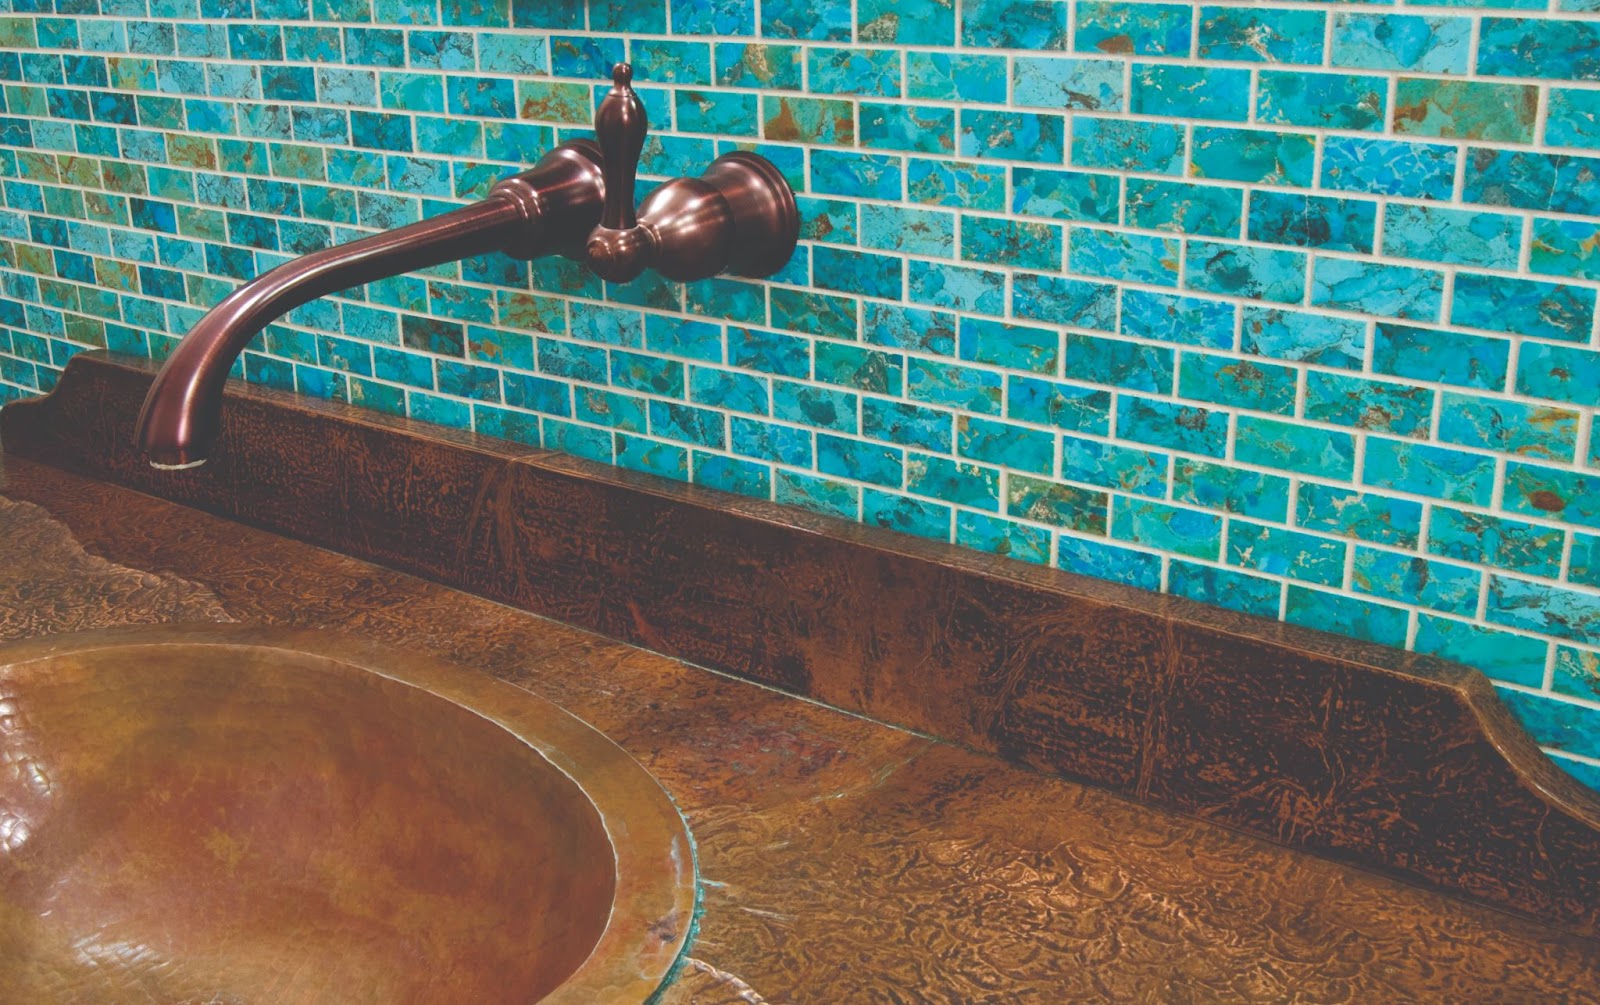 Turquoise subway tile bathroom backsplash in a natural look